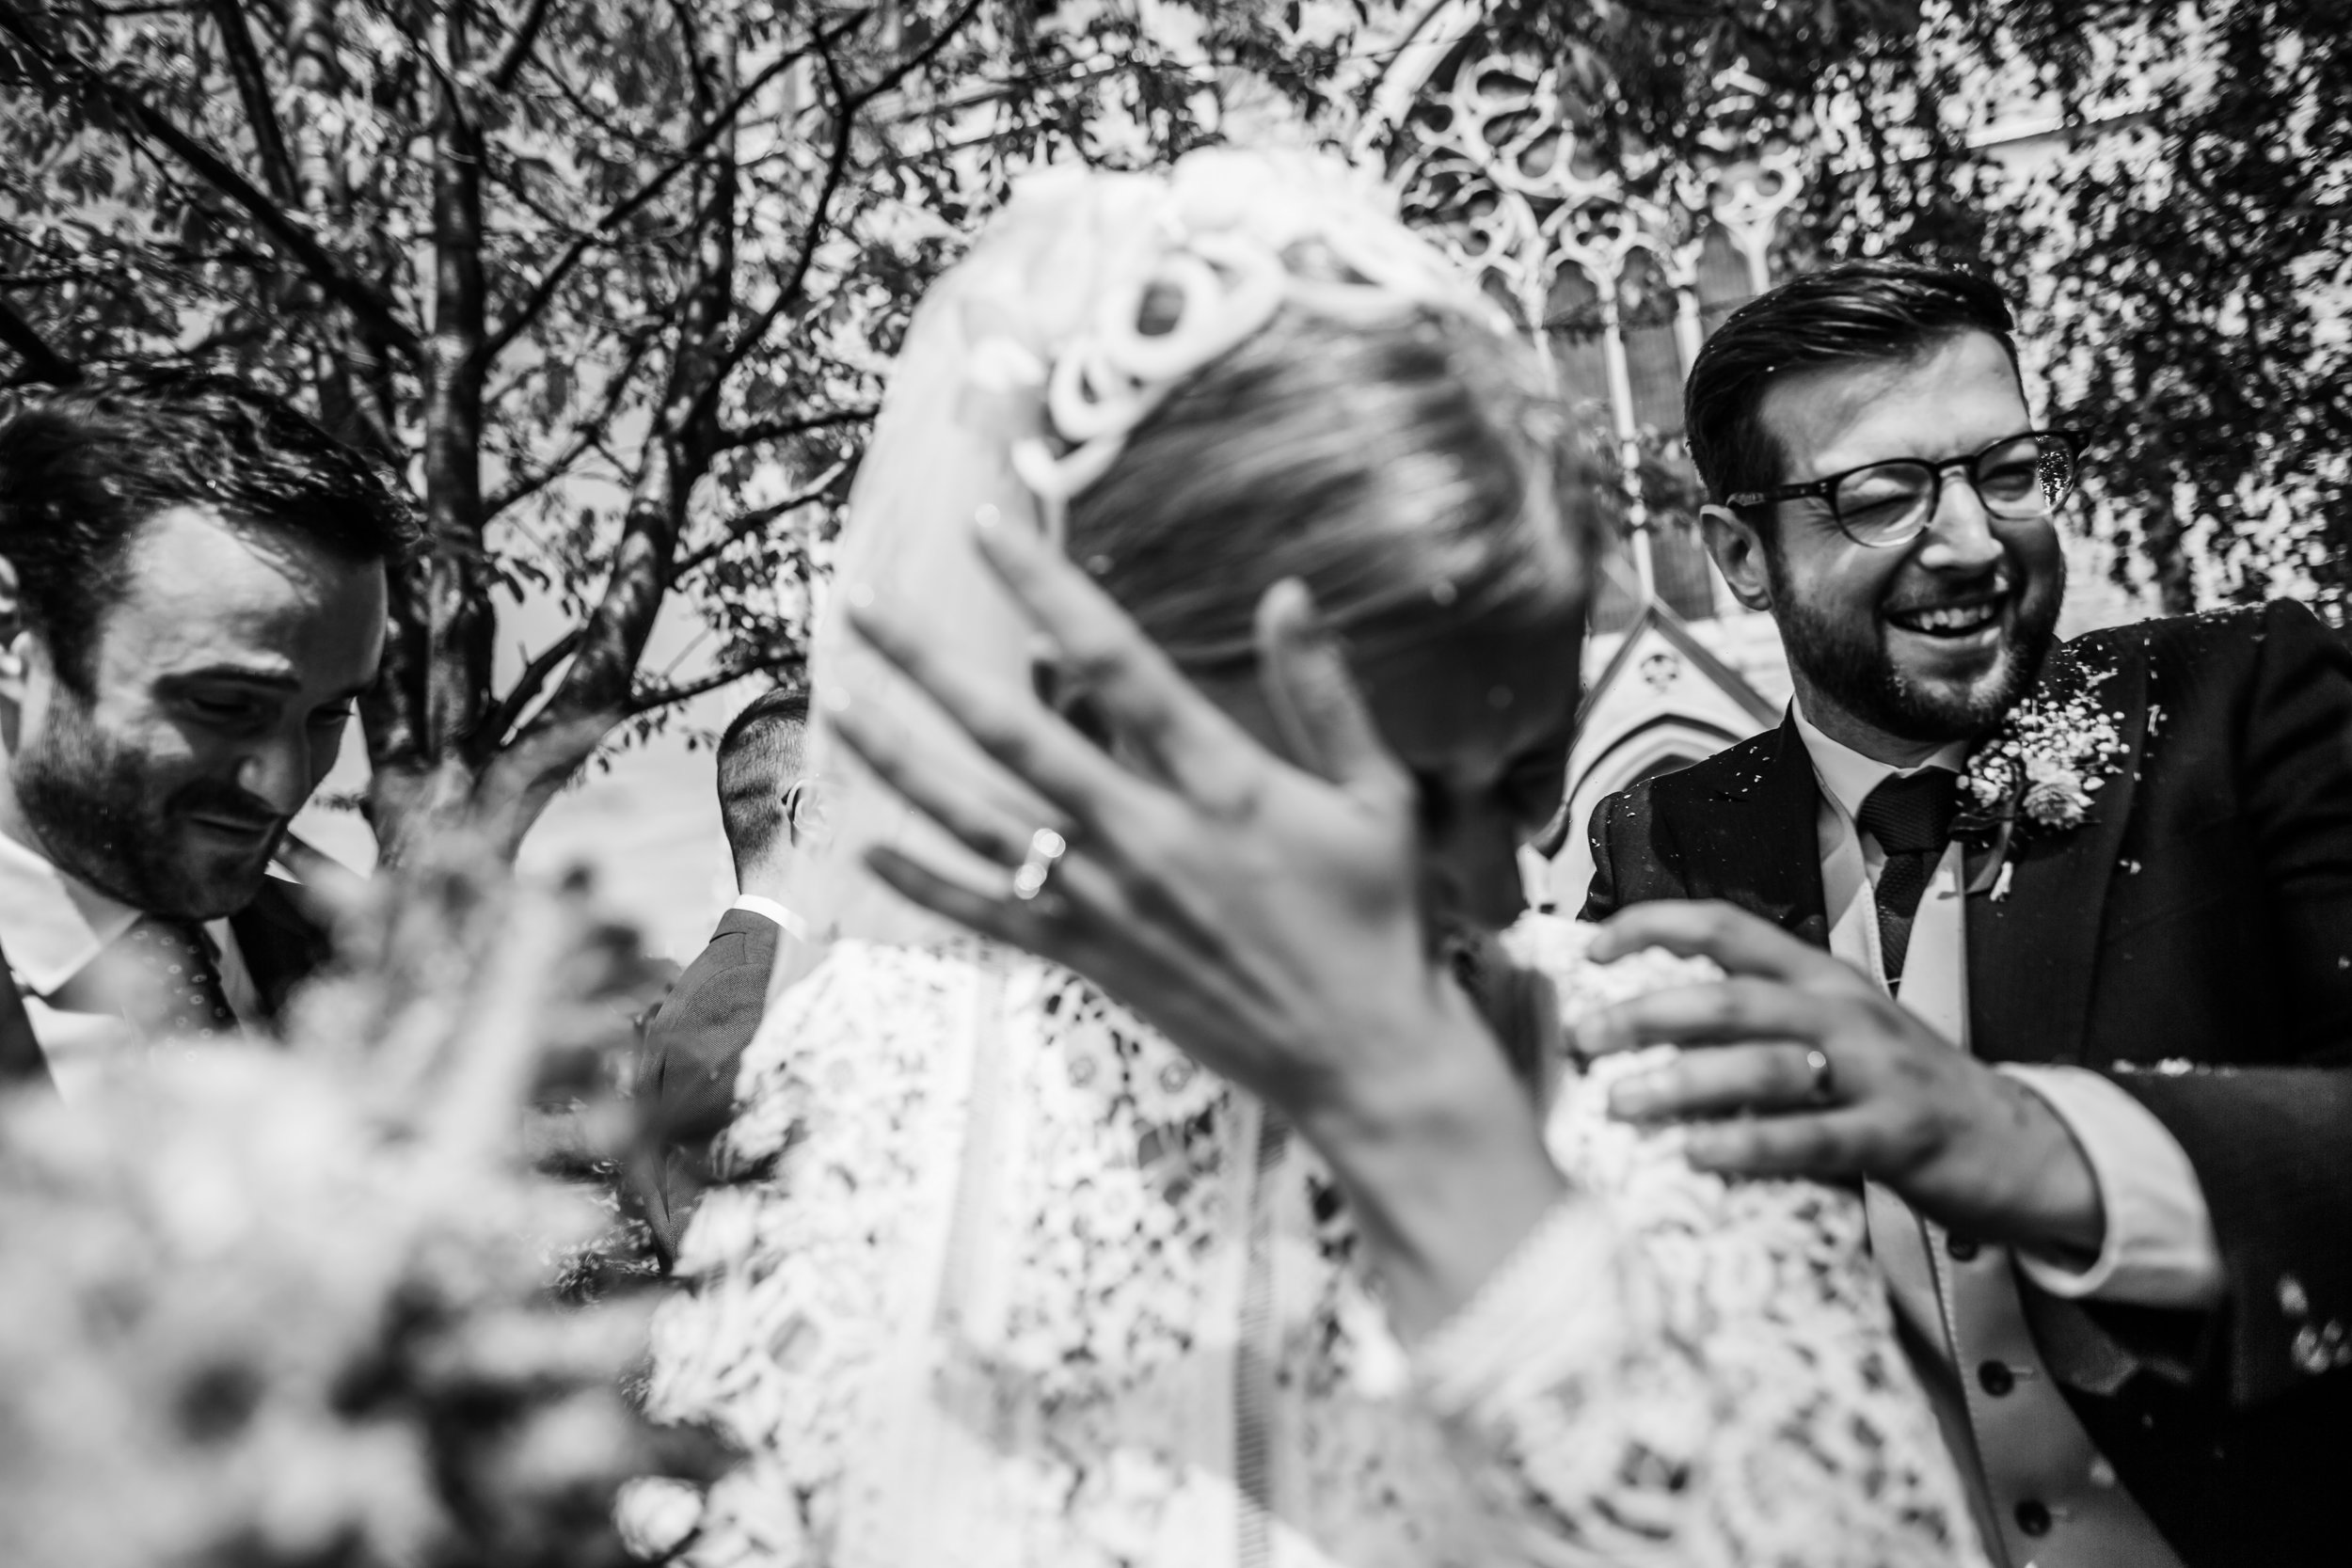 Bride and groom get a face full of confetti in Twickenham